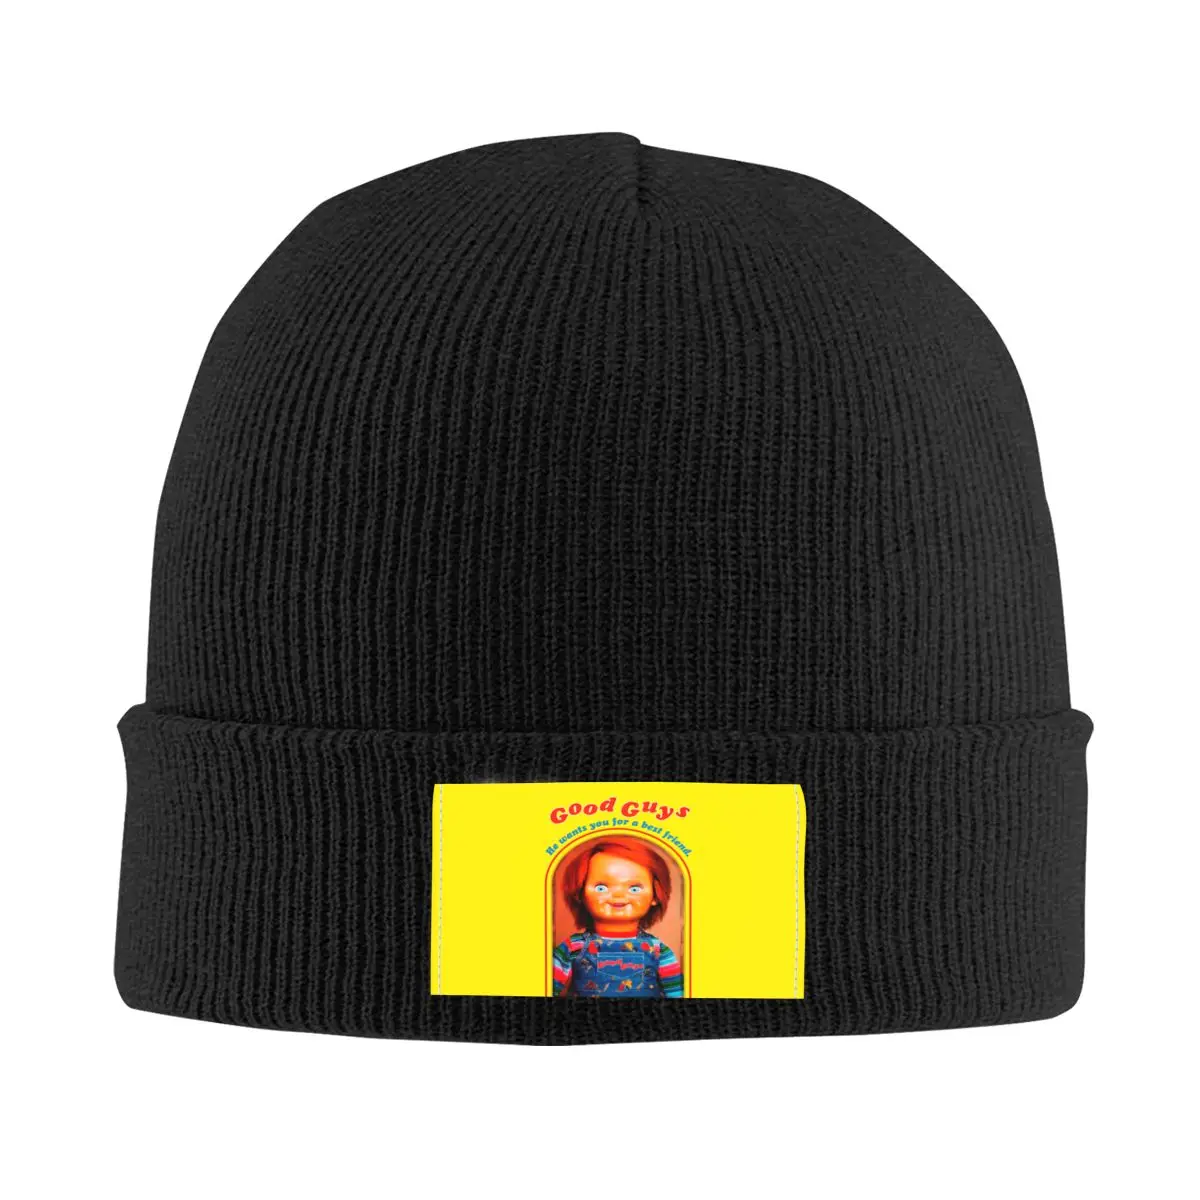 Good Guys Chucky Bonnet Hat Knitted Hats Men Women Fashion Unisex Adult Child's Play Doll Warm Winter Skullies Beanies Cap 1